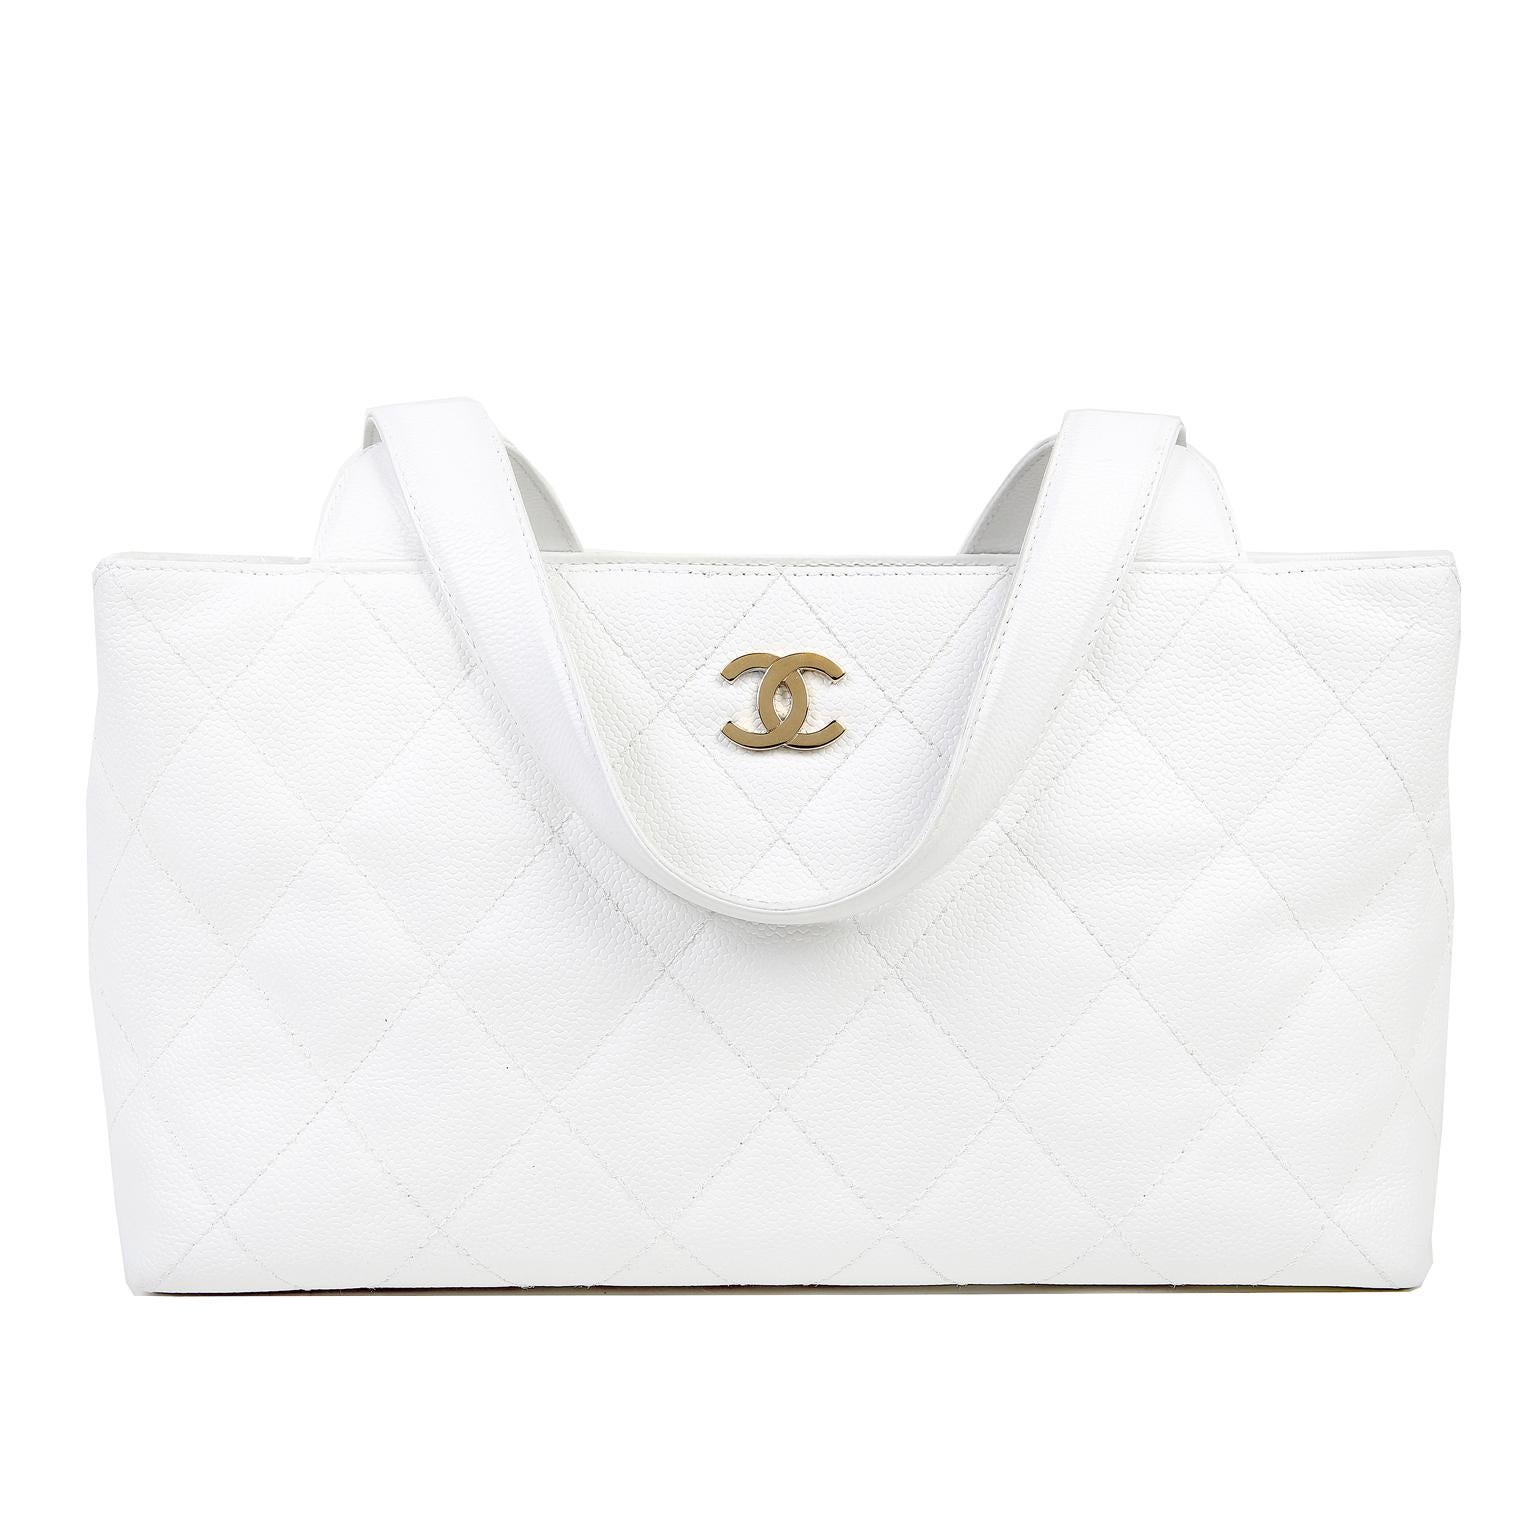 Chanel White Caviar Leather Tote Bag 3